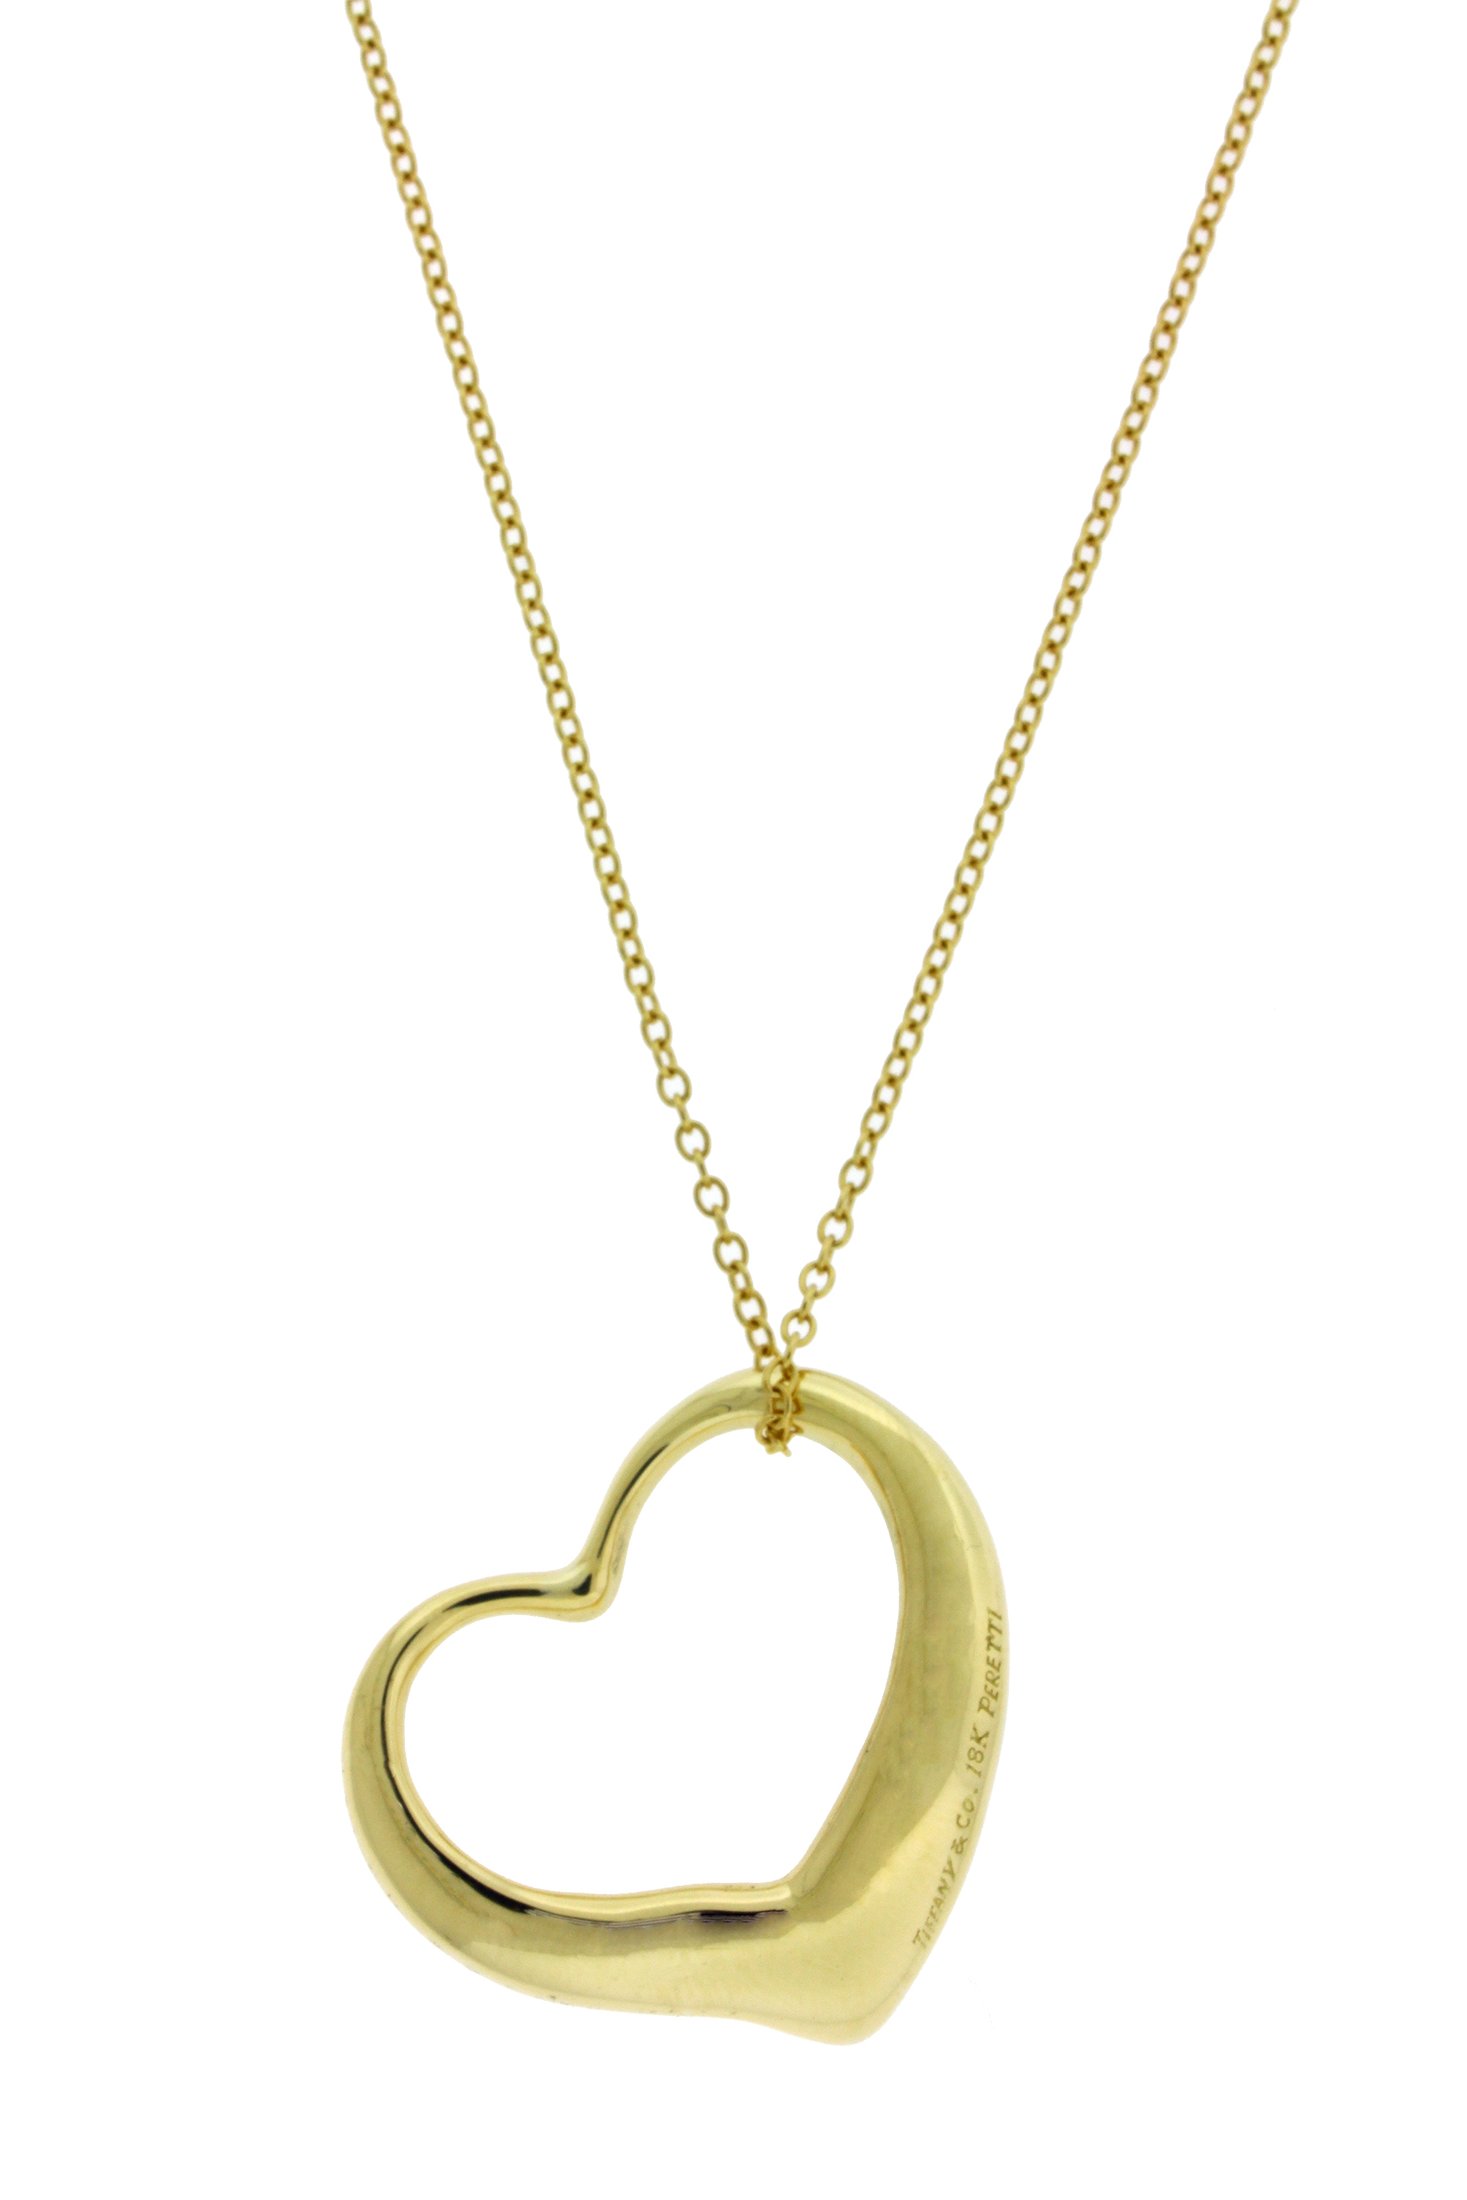 Tiffany & Co Elsa Peretti large diamond heart Necklace in 18k 28 inches